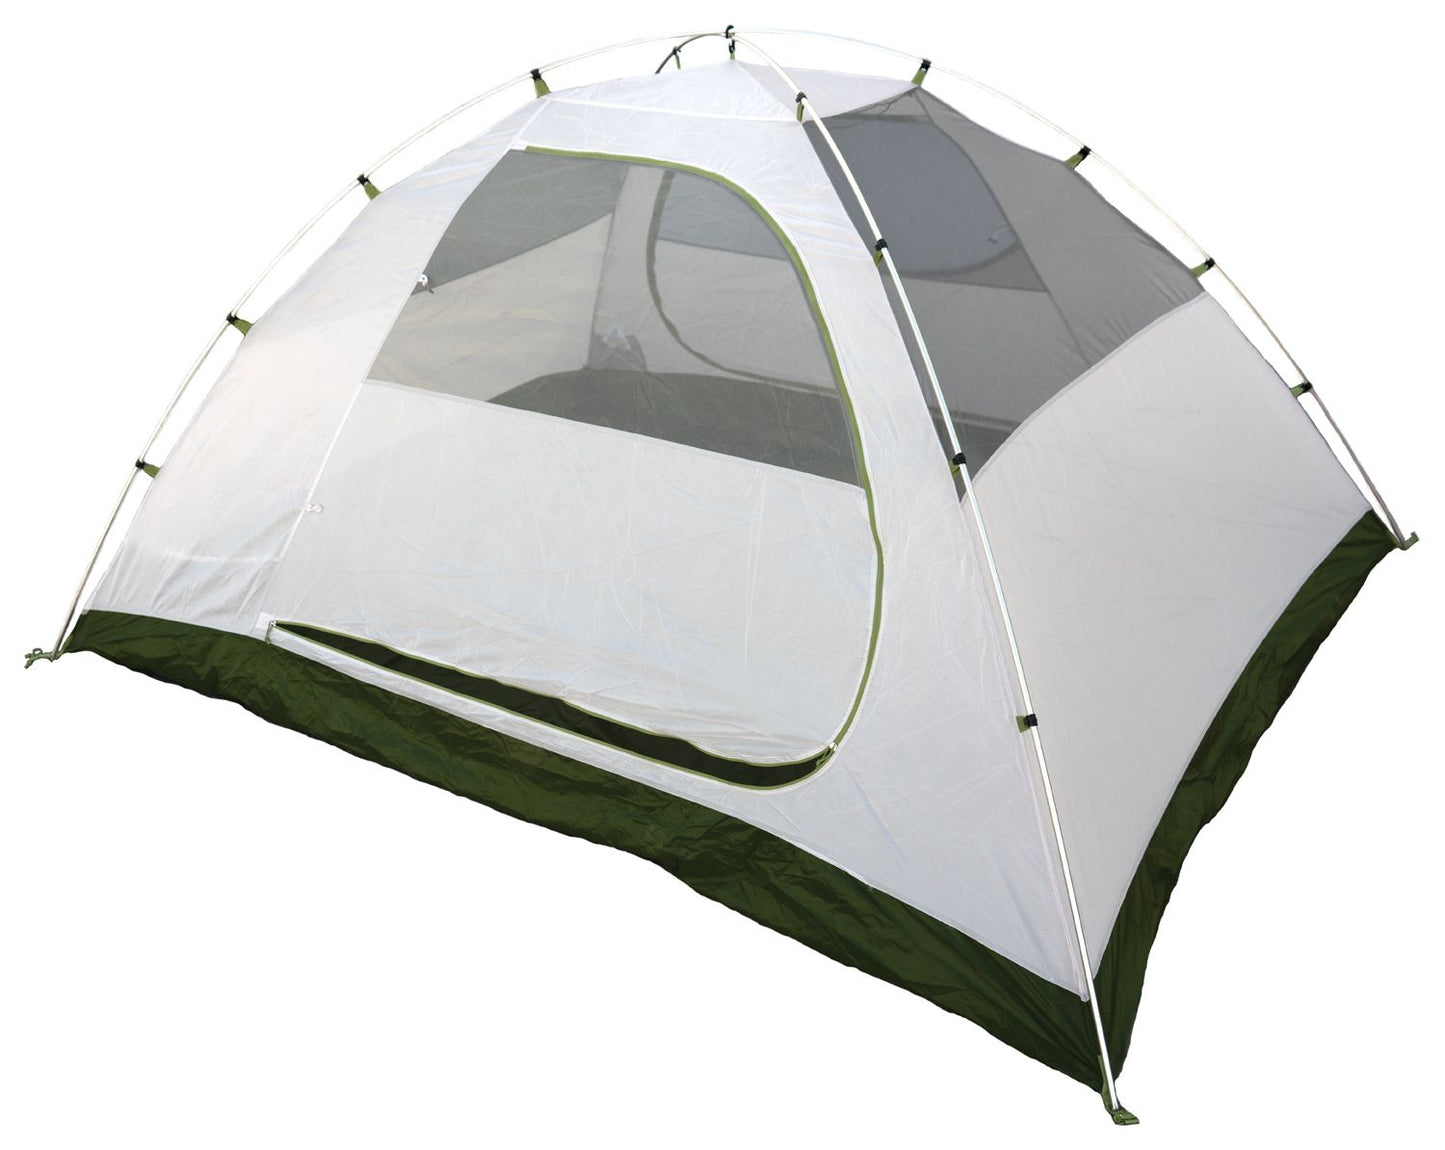 Peregrine Equipment Gannet 4-Person Tent / Footprint Combo 580562